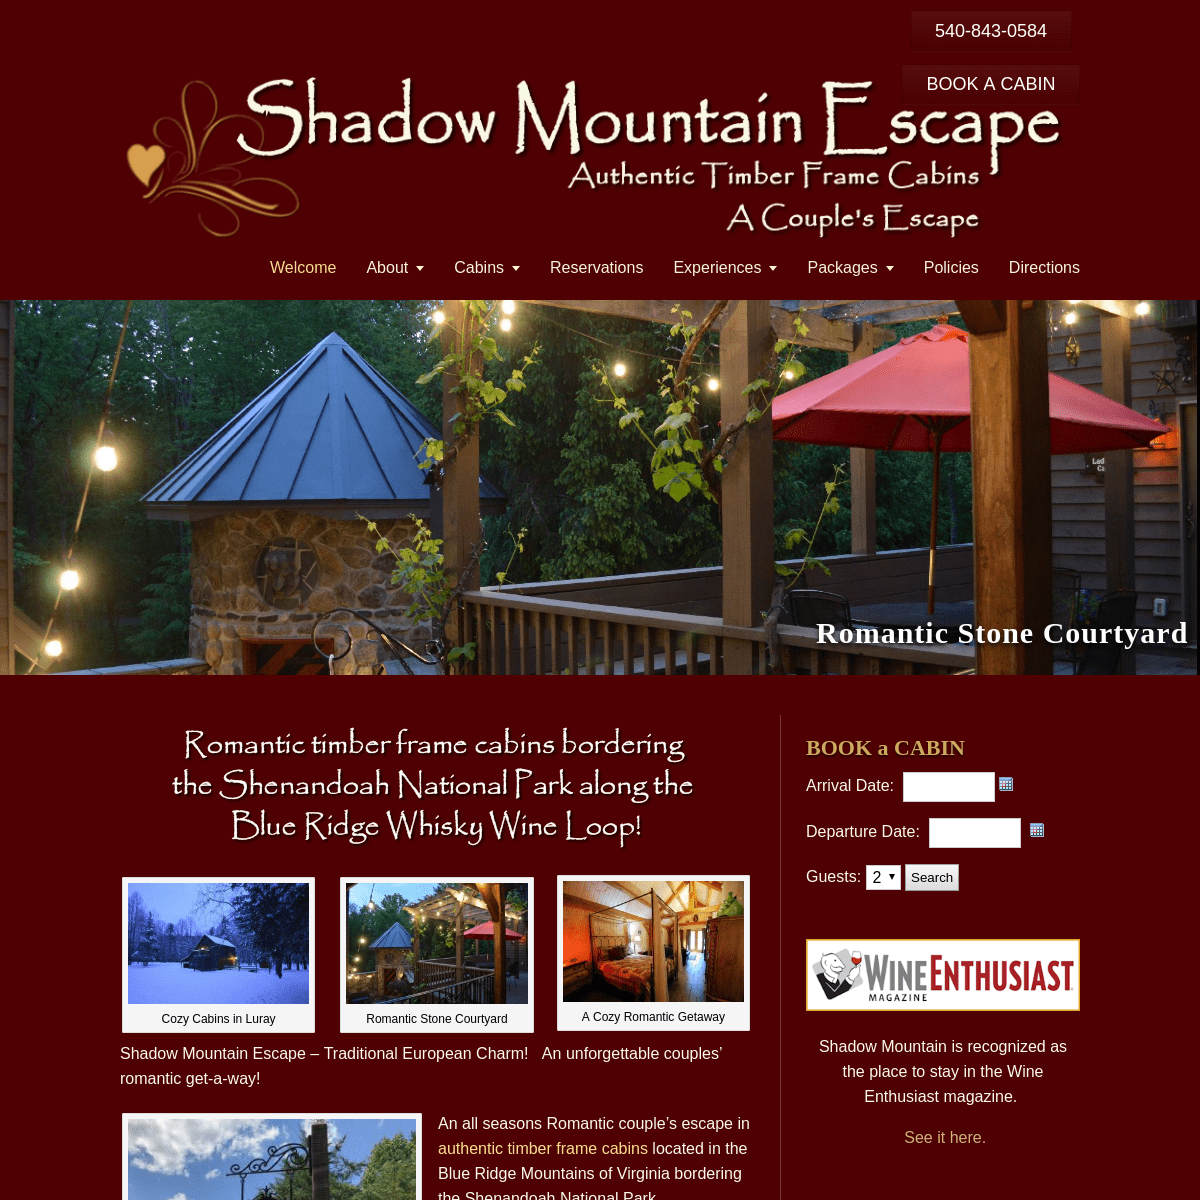 Shadow Mountain Escape bordering the Shenandoah National Park - Skyline Drive in Luray, Virginia